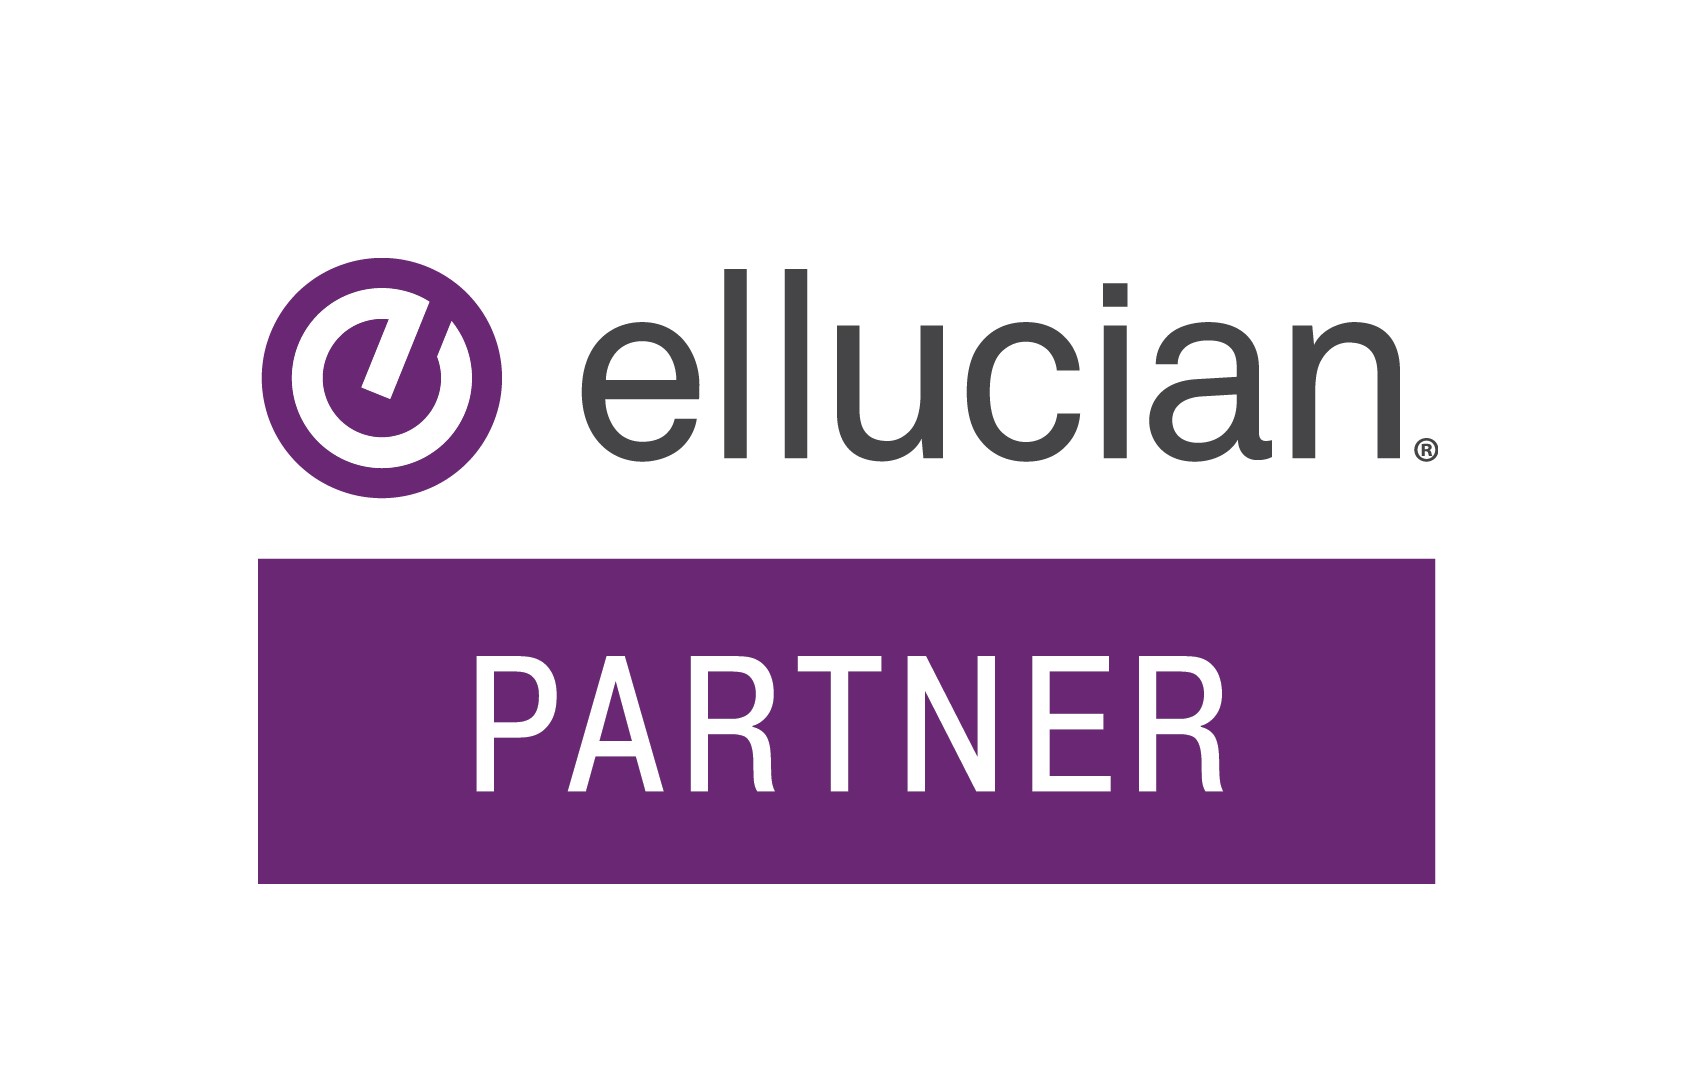 N2N Services Inc. is now an Ellucian Alliance Partner